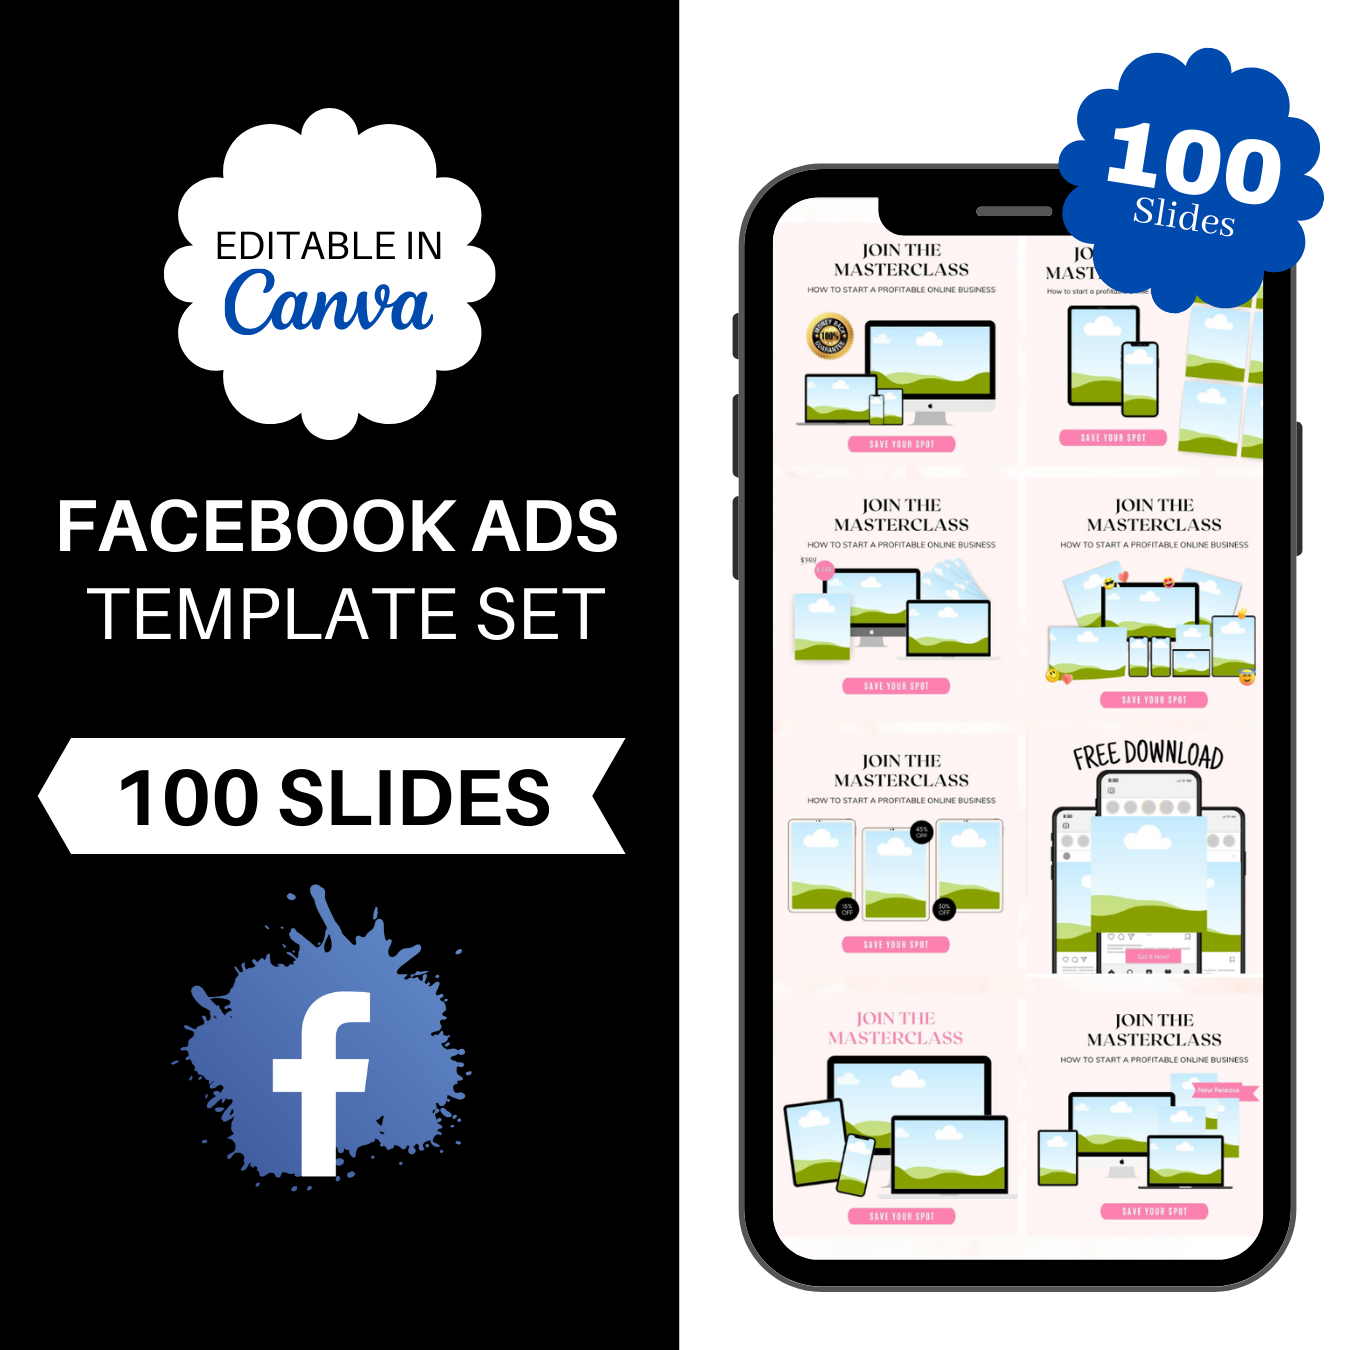 Facebook Ads Template Set Editable in Canva - 100 slides